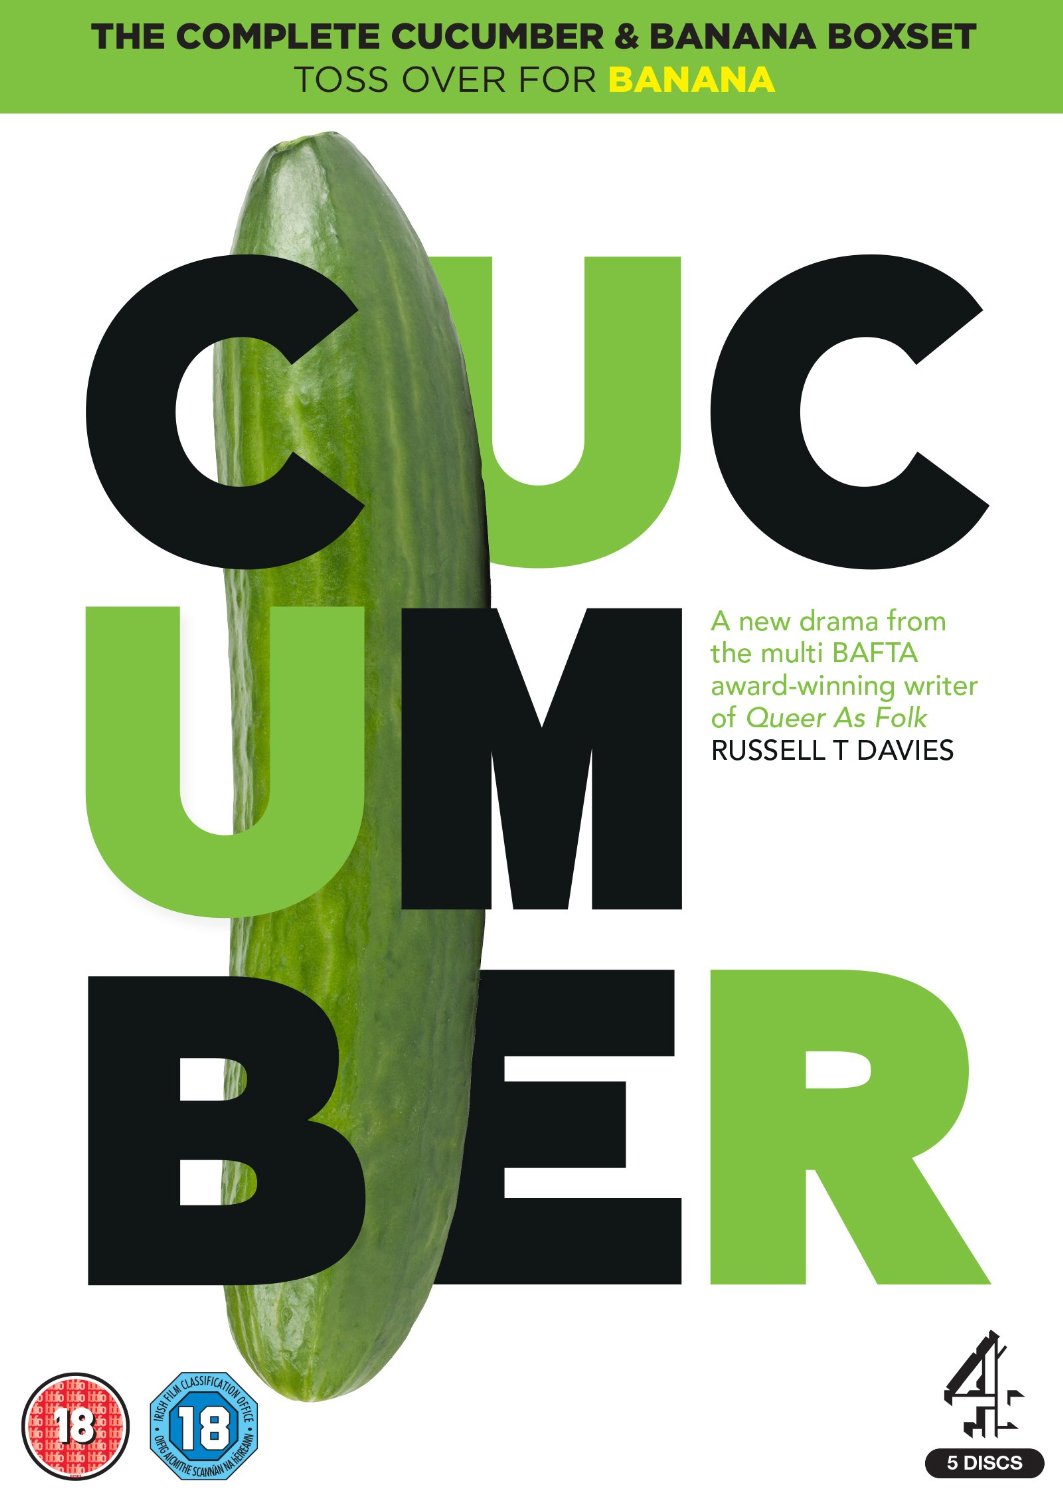 Cucumber & Banana Box Set (DVD)